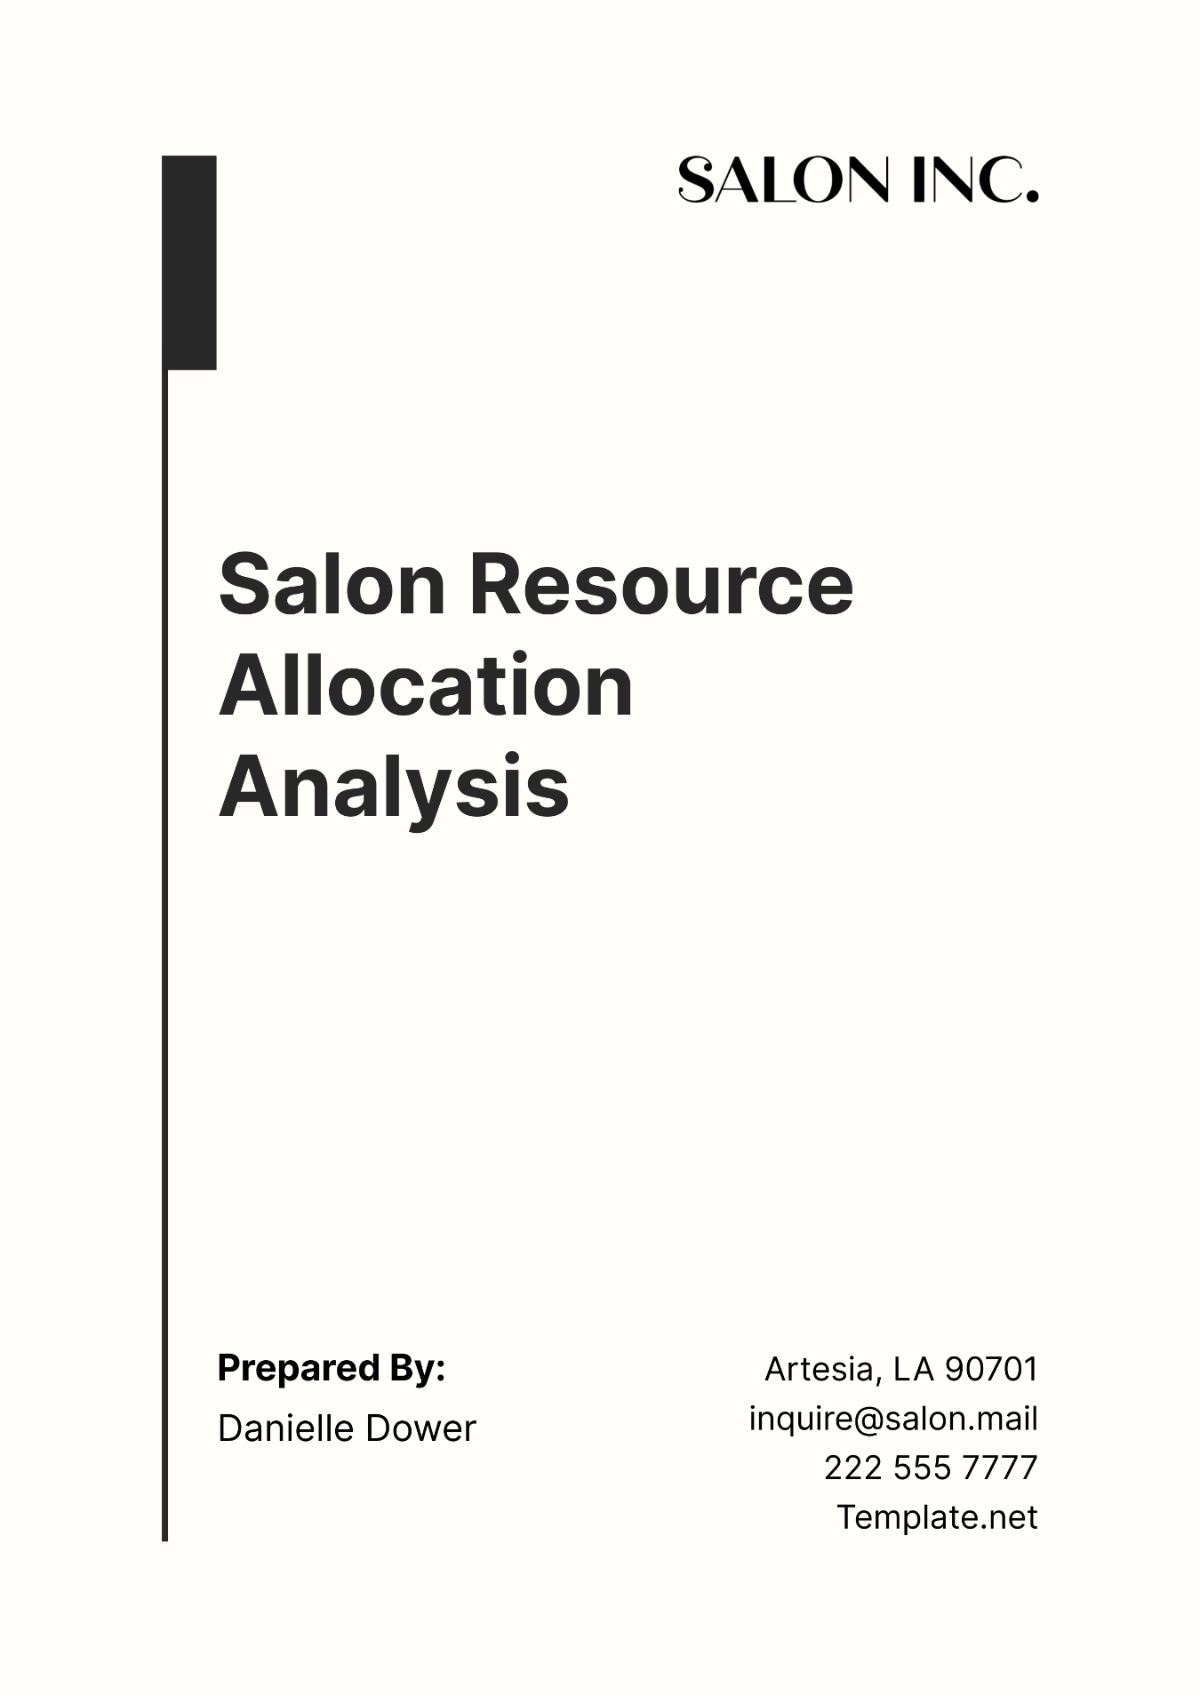 Salon Resource Allocation Analysis Template